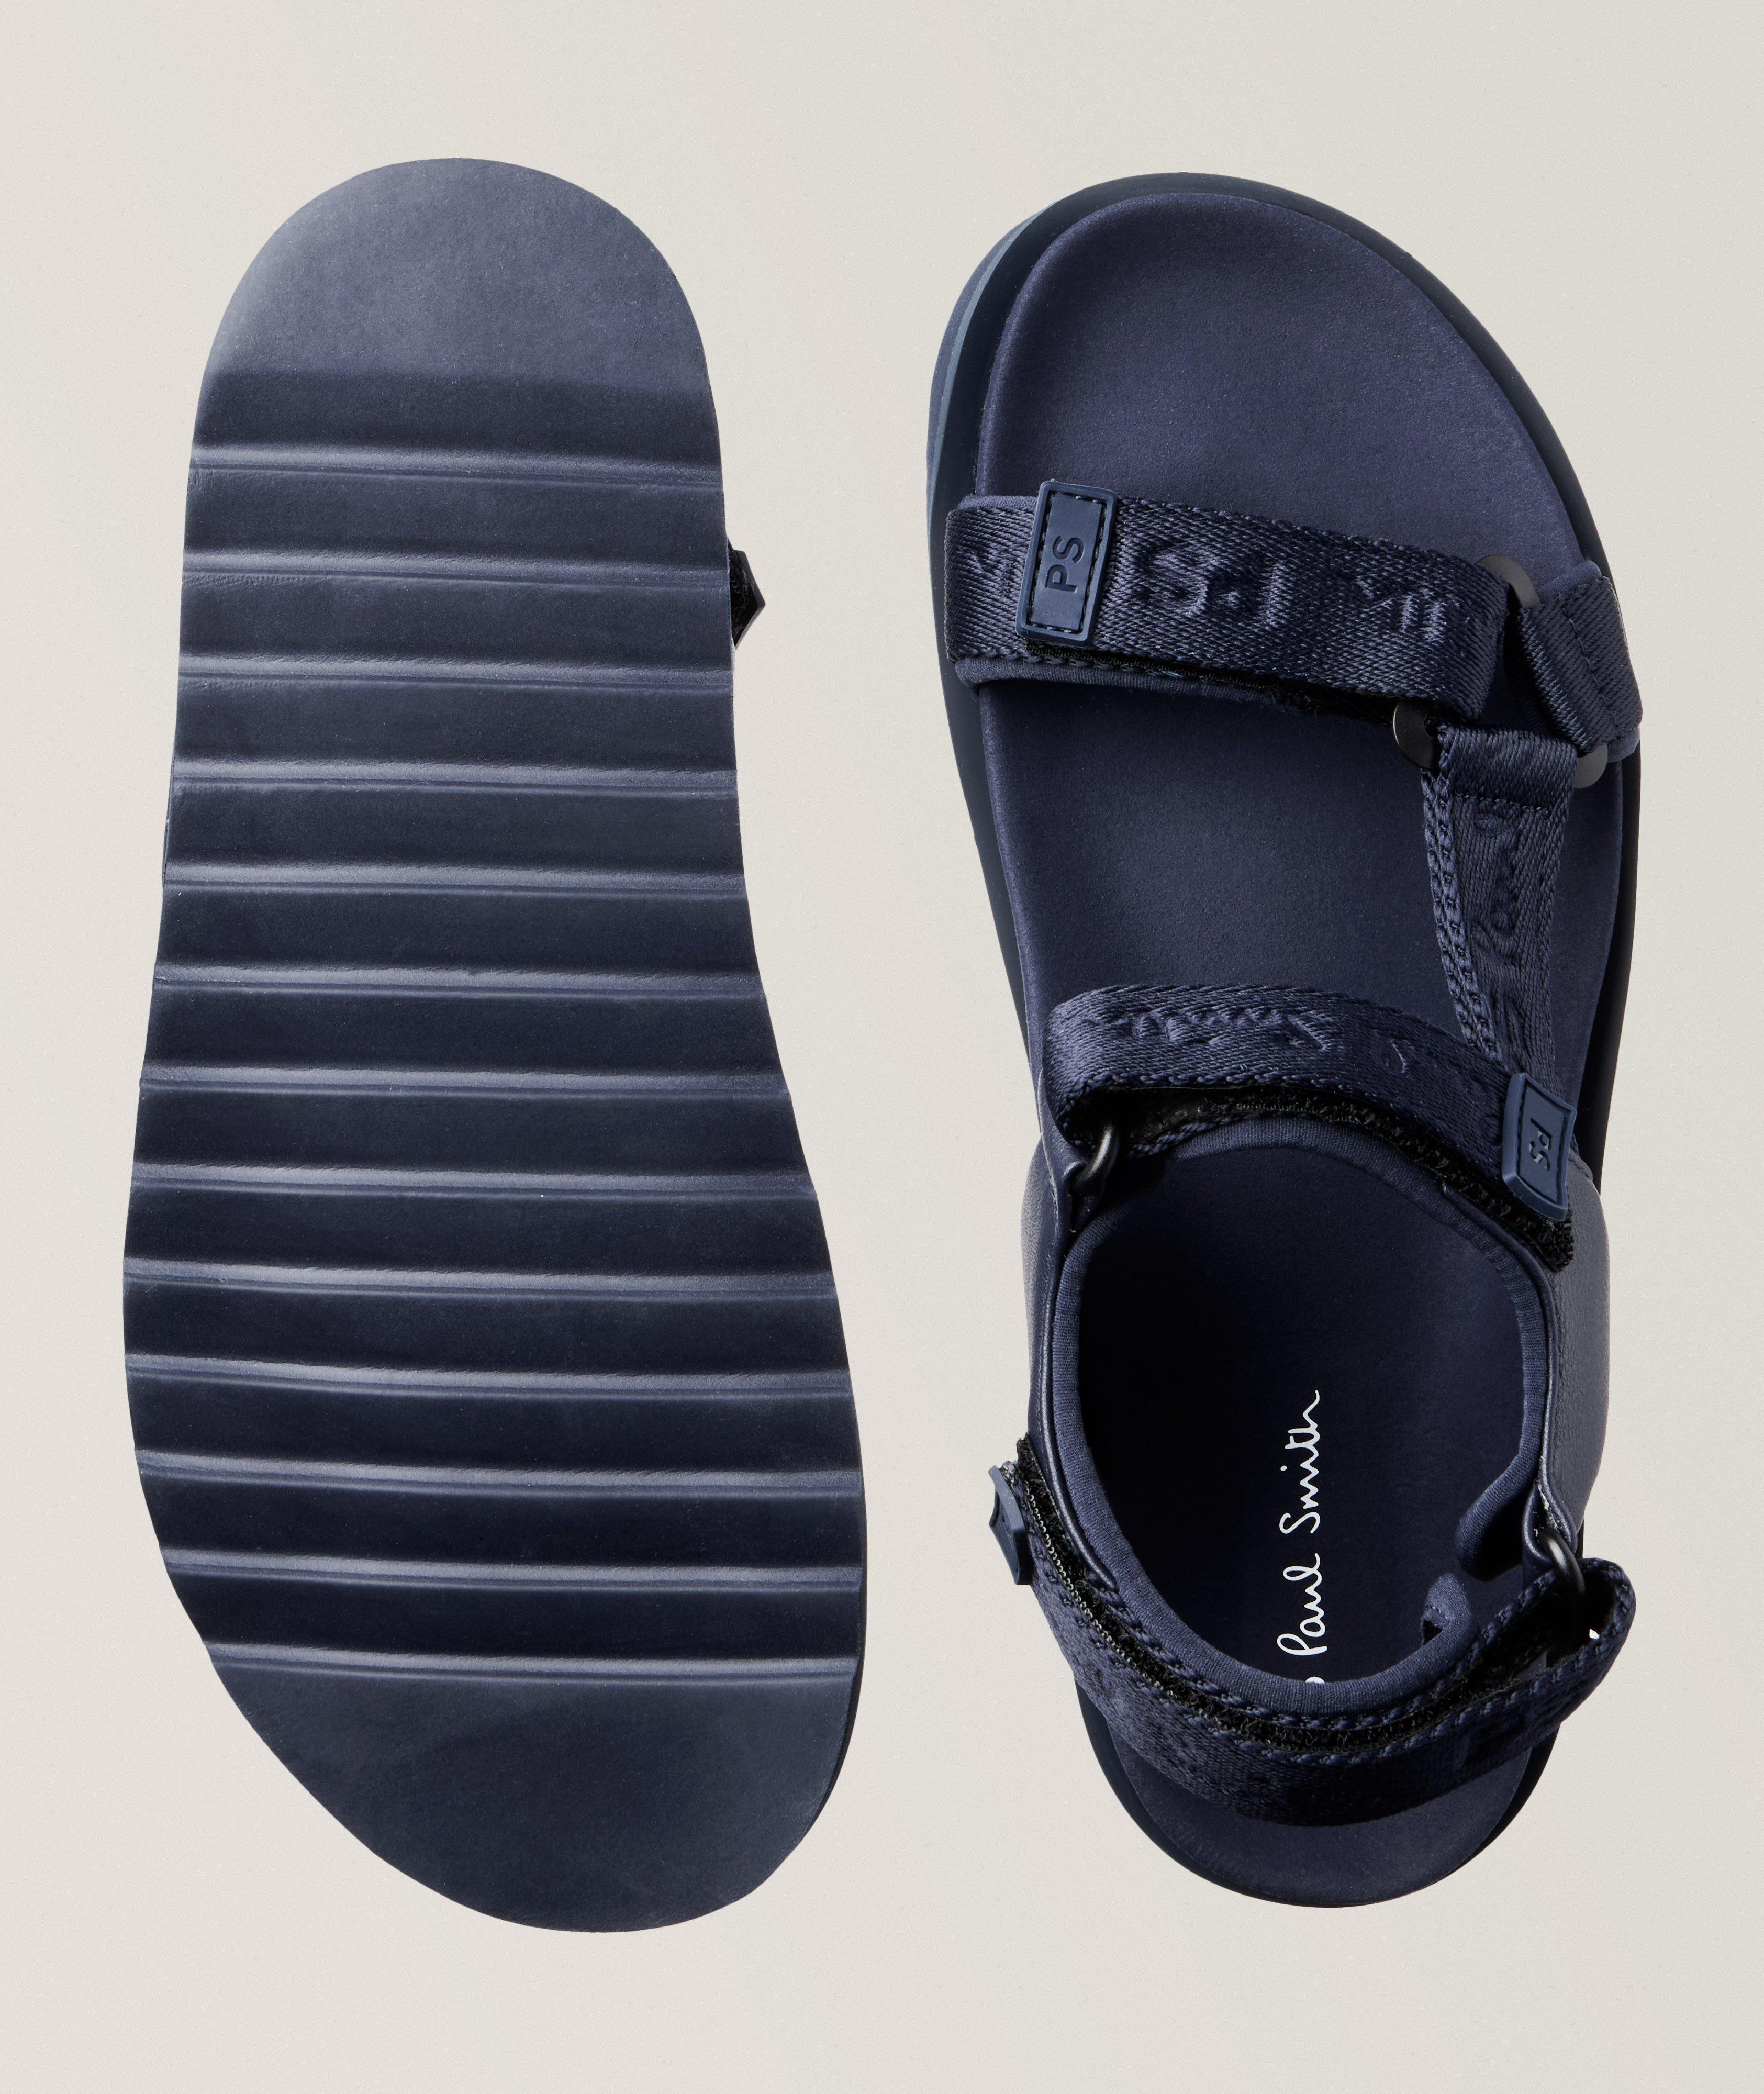 Dorado Suede & Leather Sandals image 2